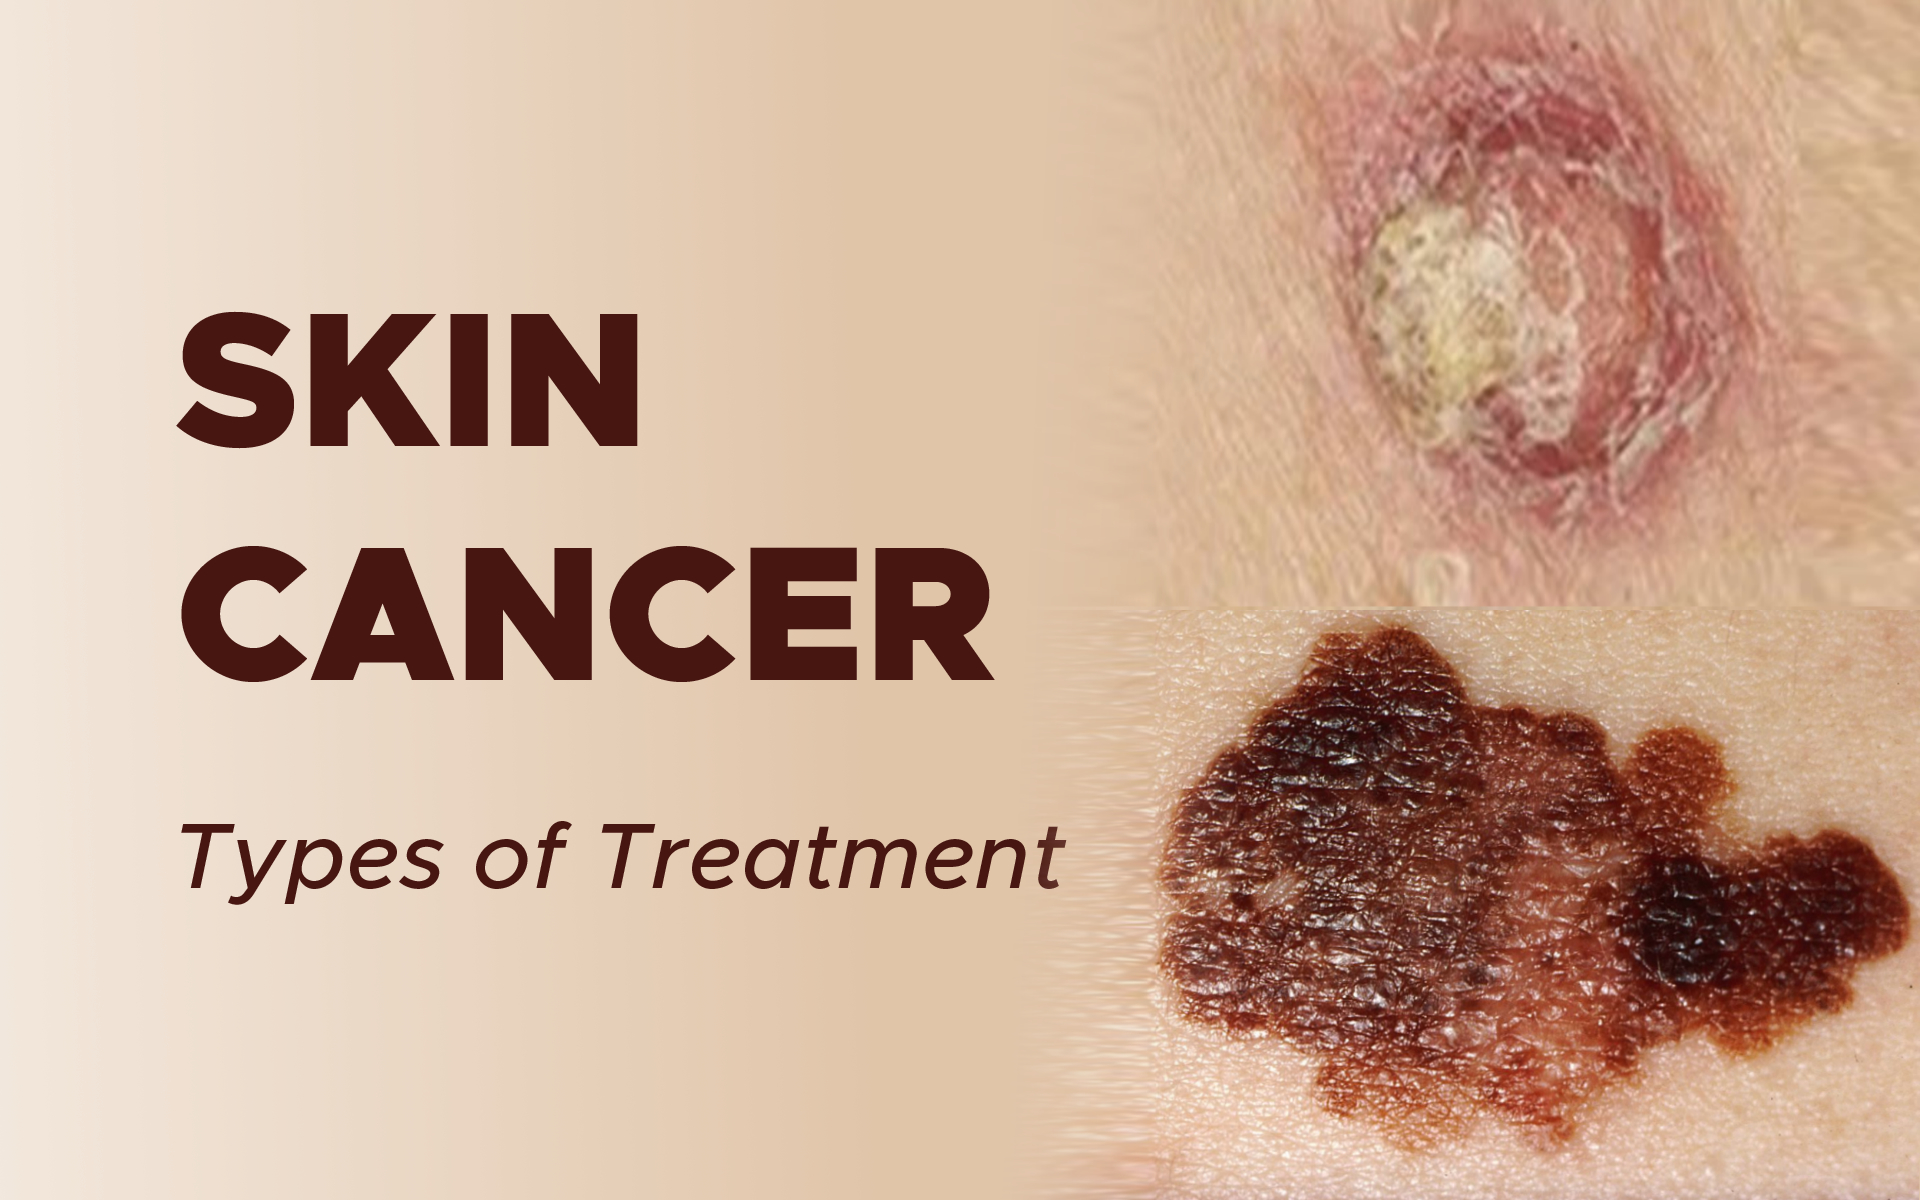 Treatment of Skin Cancer (Non-Melanoma)